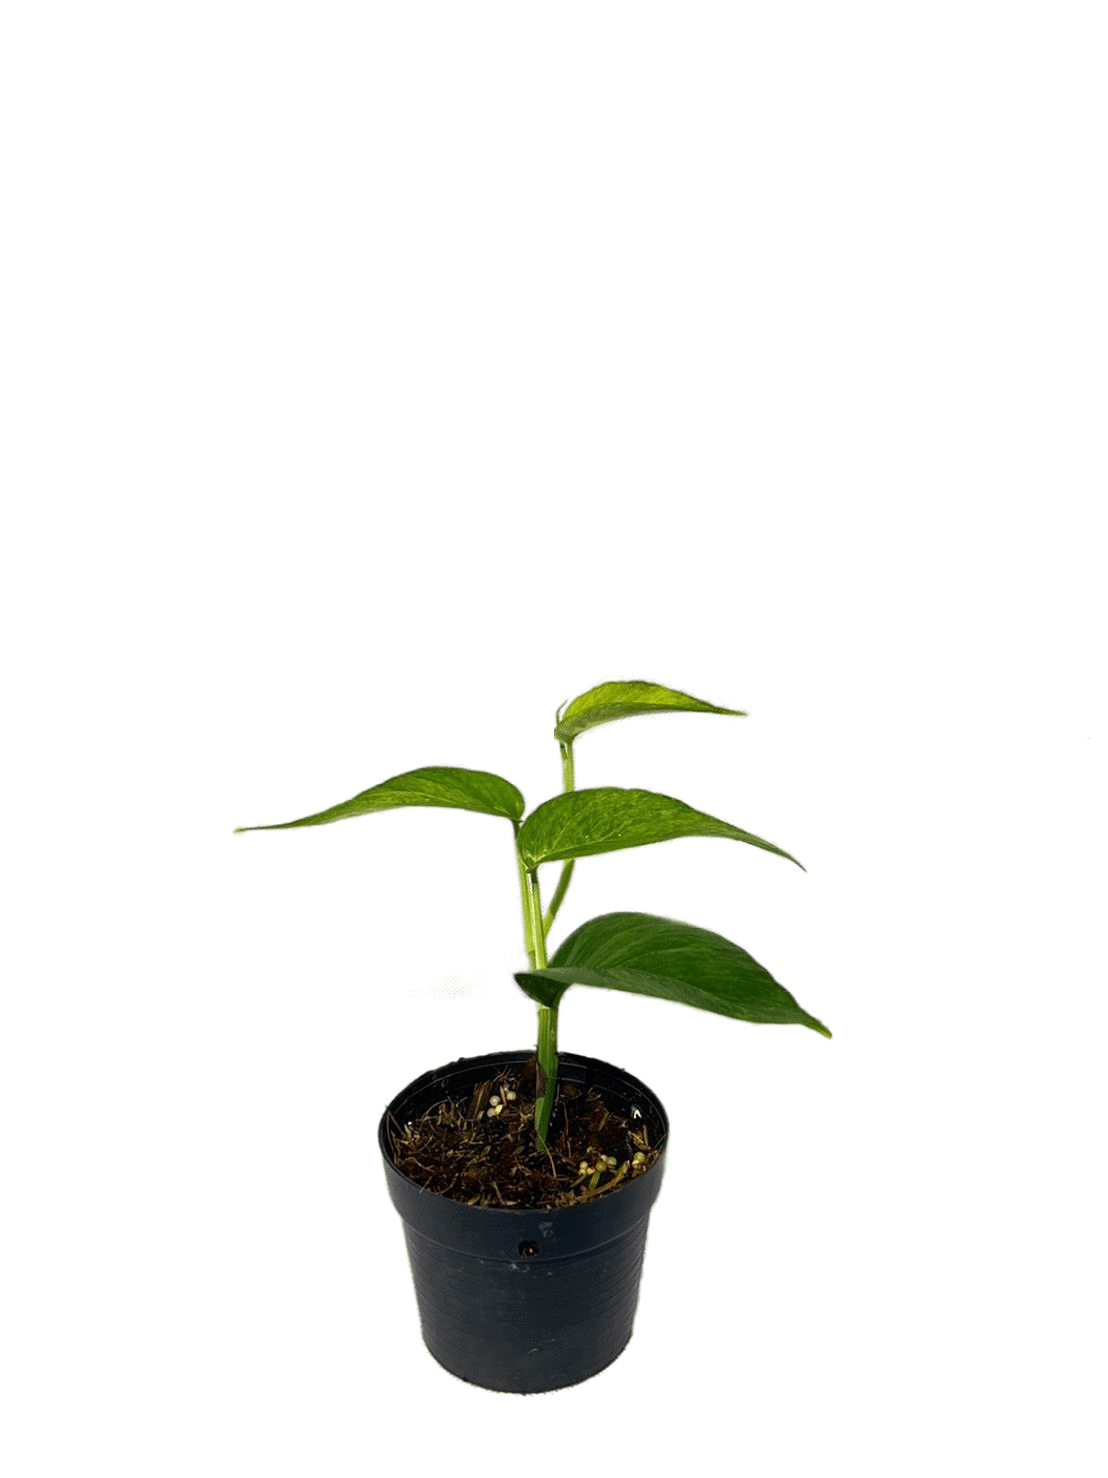 PlantChaser on X: Mint for me. Epipremnun pinnatum 'Mint' showing some  beautiful leaf variegation. Blessed Sunday! #epipremnumpinnatummint  #epipremnumpinnatumvariegata #epipremnum #aroid #araceae #variegatedplants  #variegatedleaves #garden #gardening